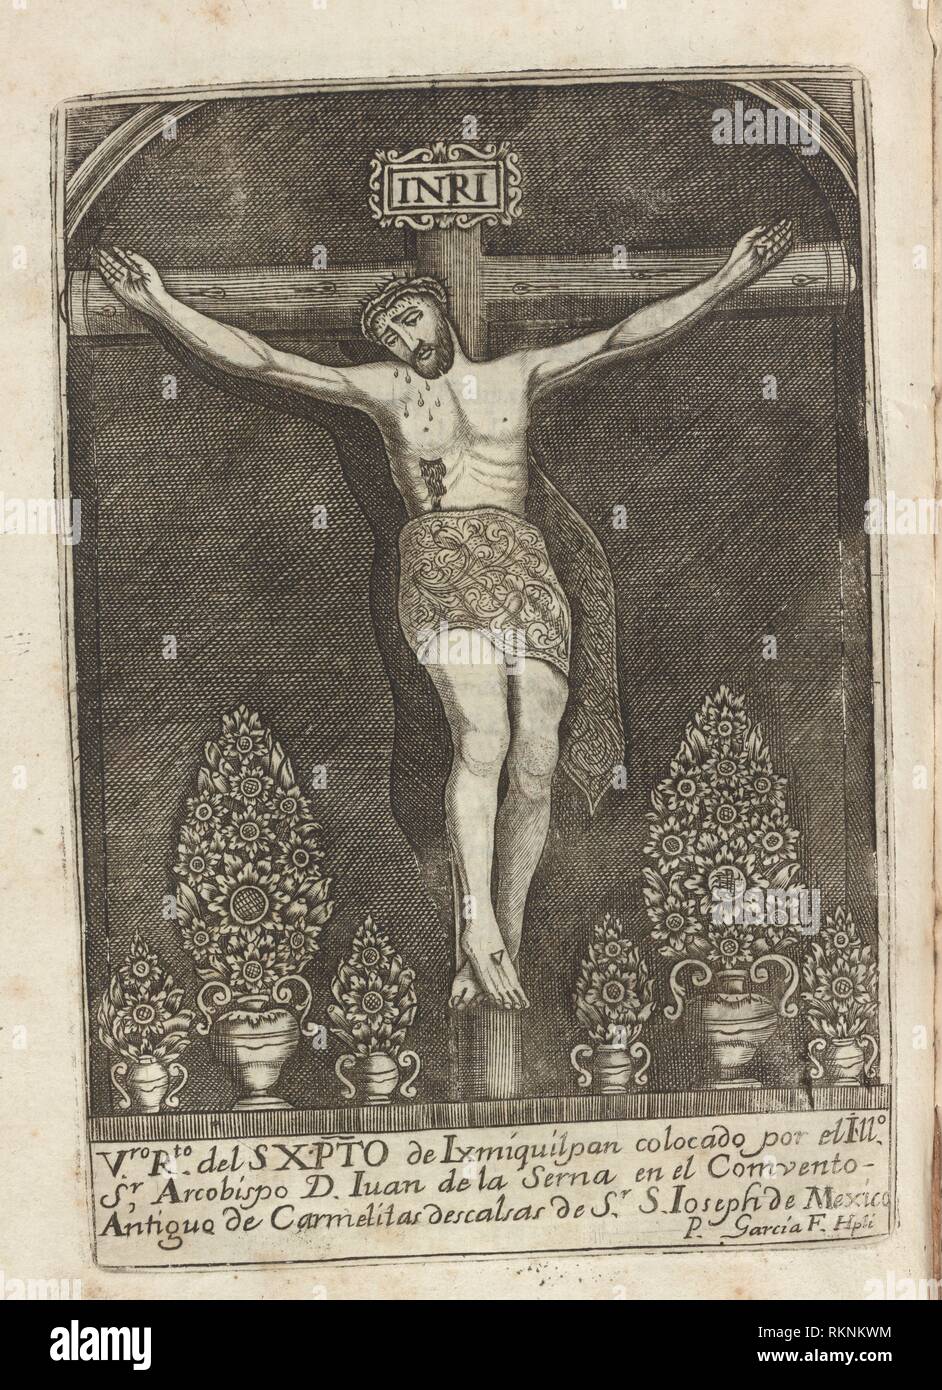 Christ of Ixmiquilpan. Velasco, Alfonso Alberto de, 1635-1704 (Author). Exaltacion de la divina misericordia en la milagrosa renovacion de la Stock Photo